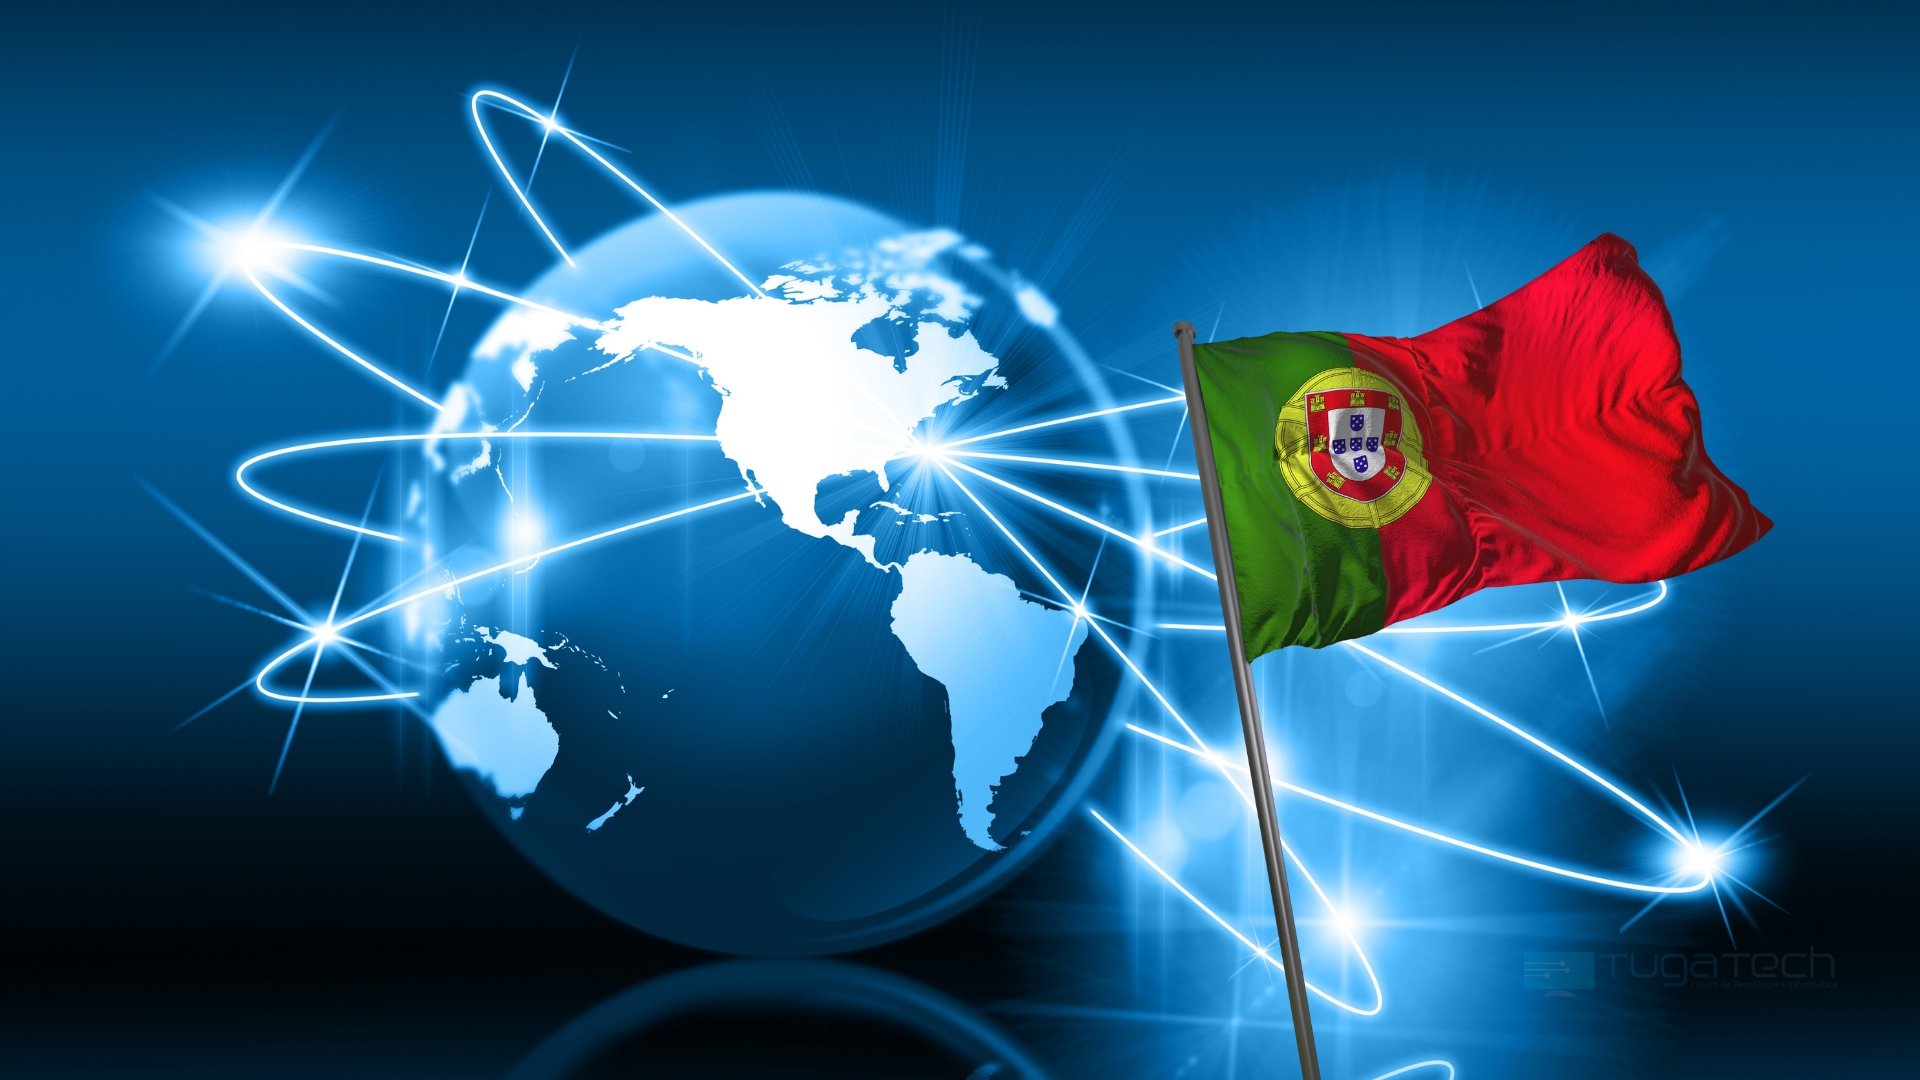 Internet em Portugal